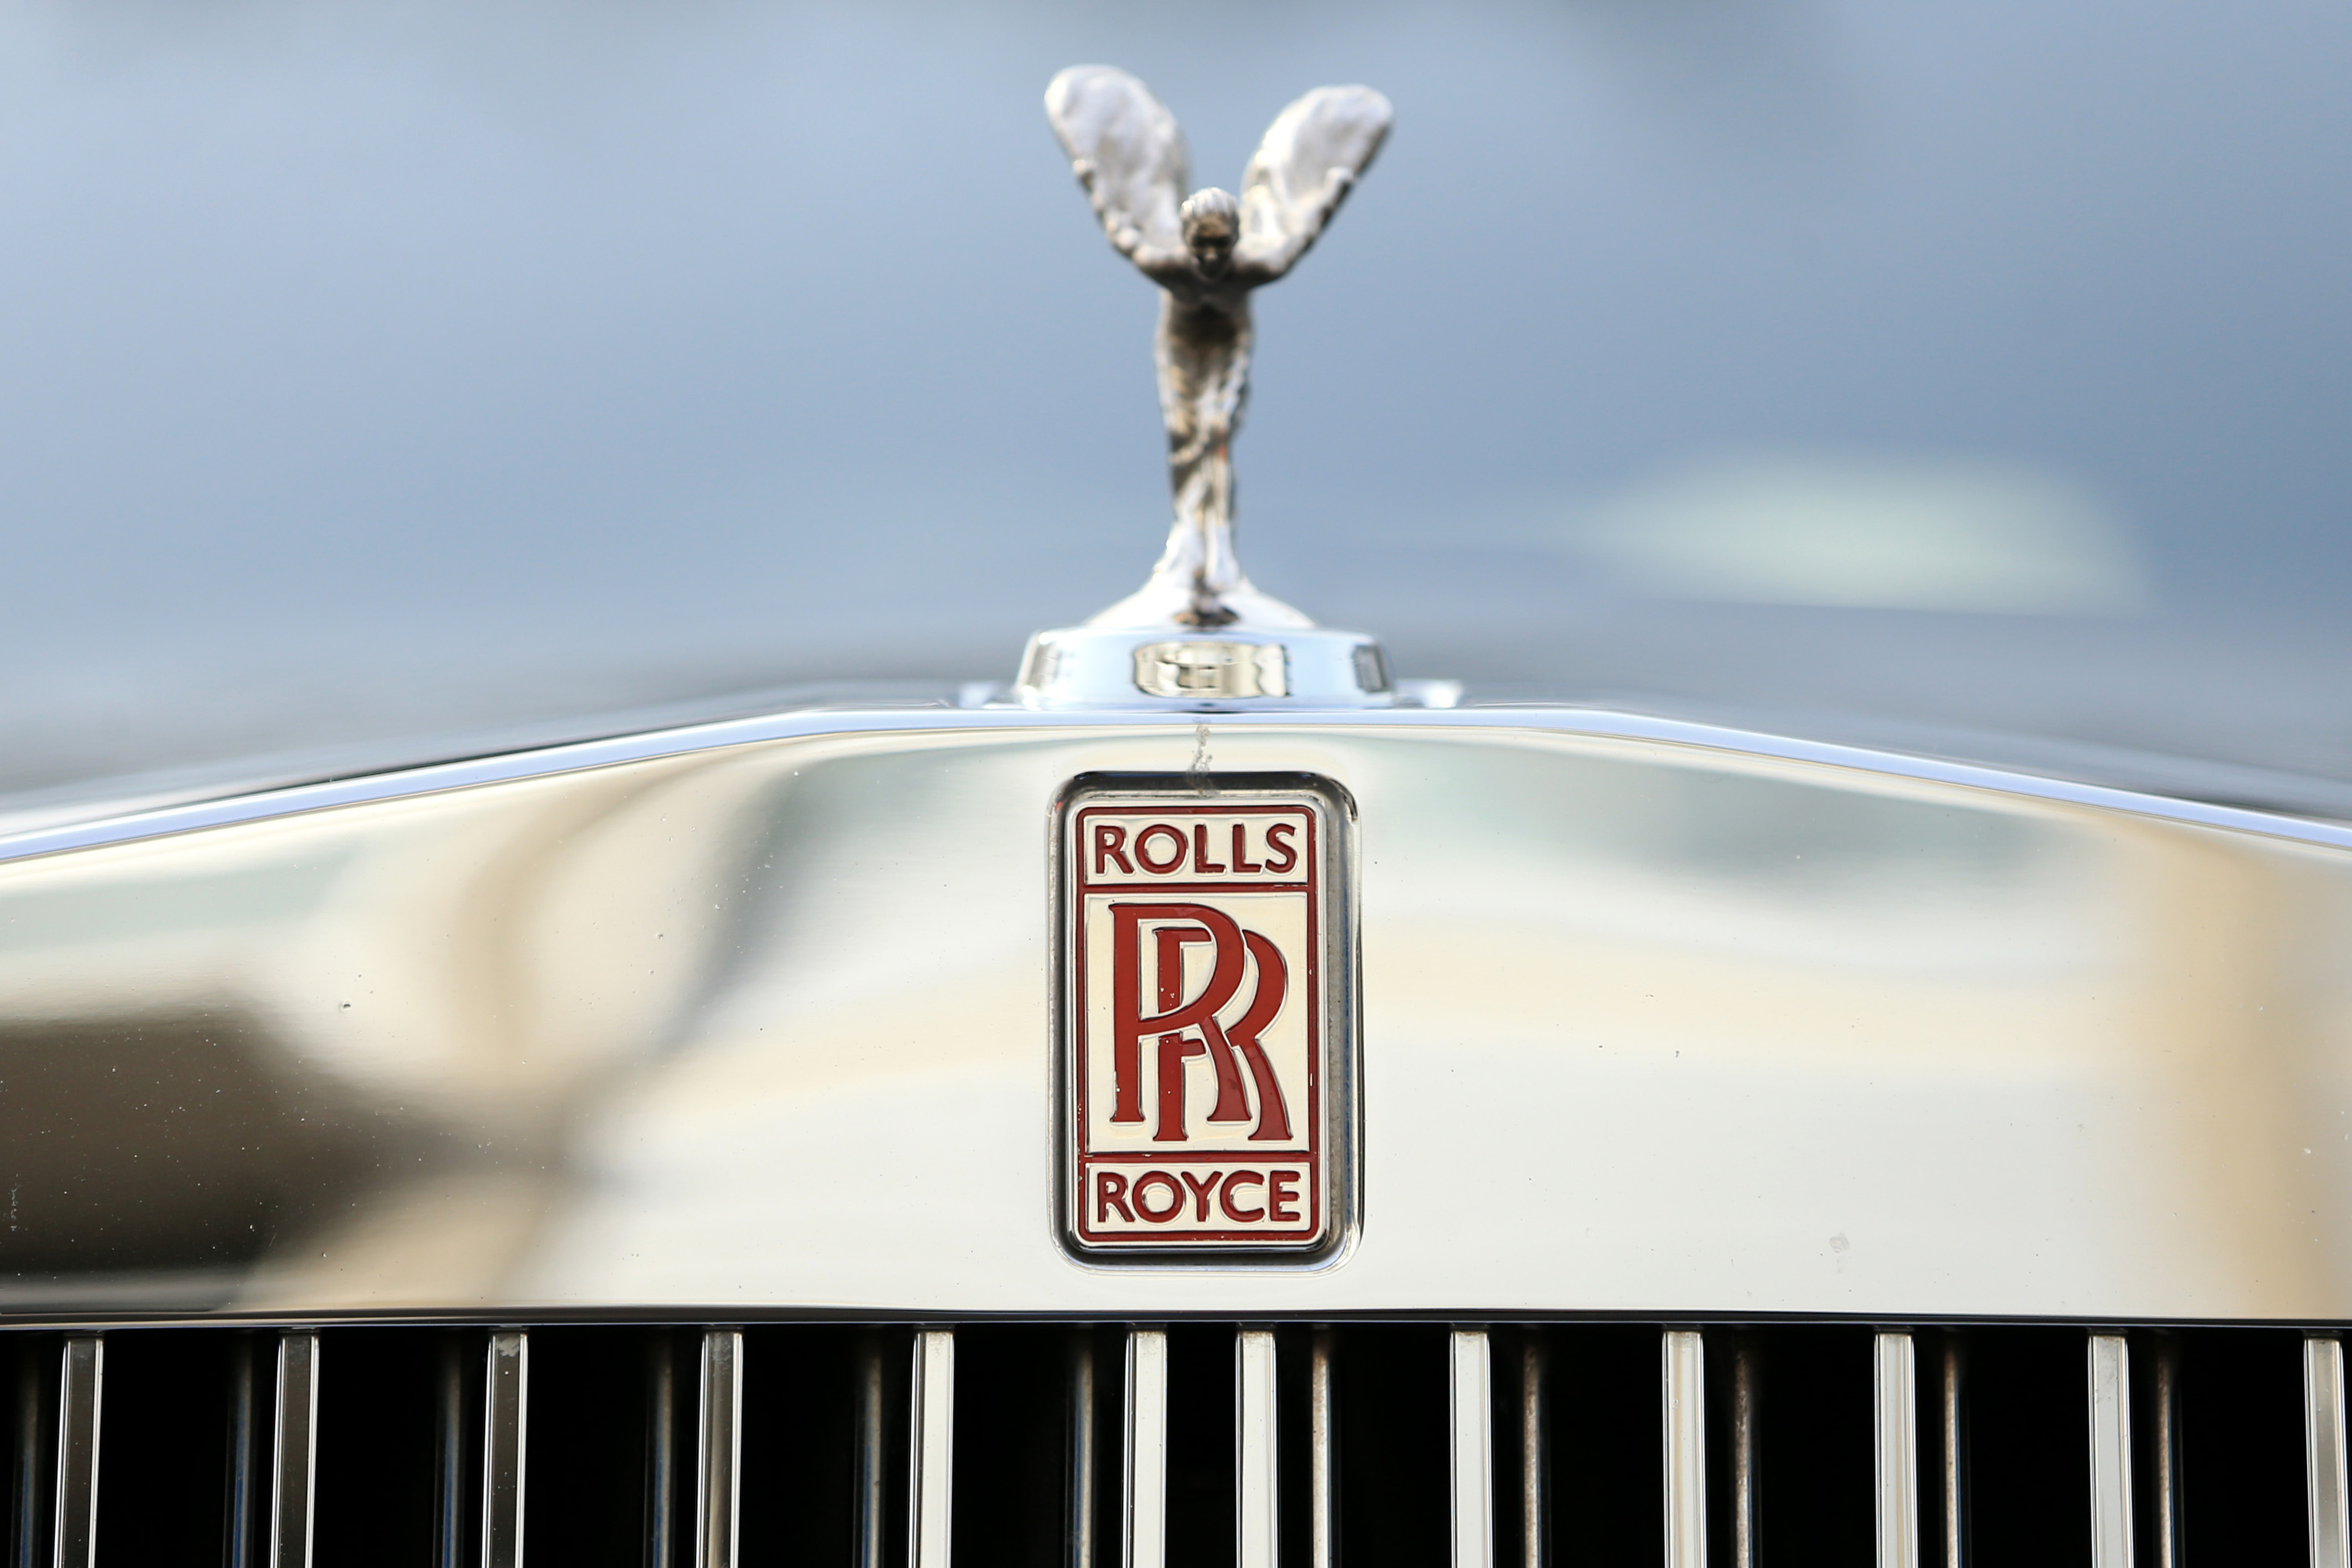 What It's LIke to Drive a $400,000 Rolls Royce Ghost in the Snow -  InsideHook